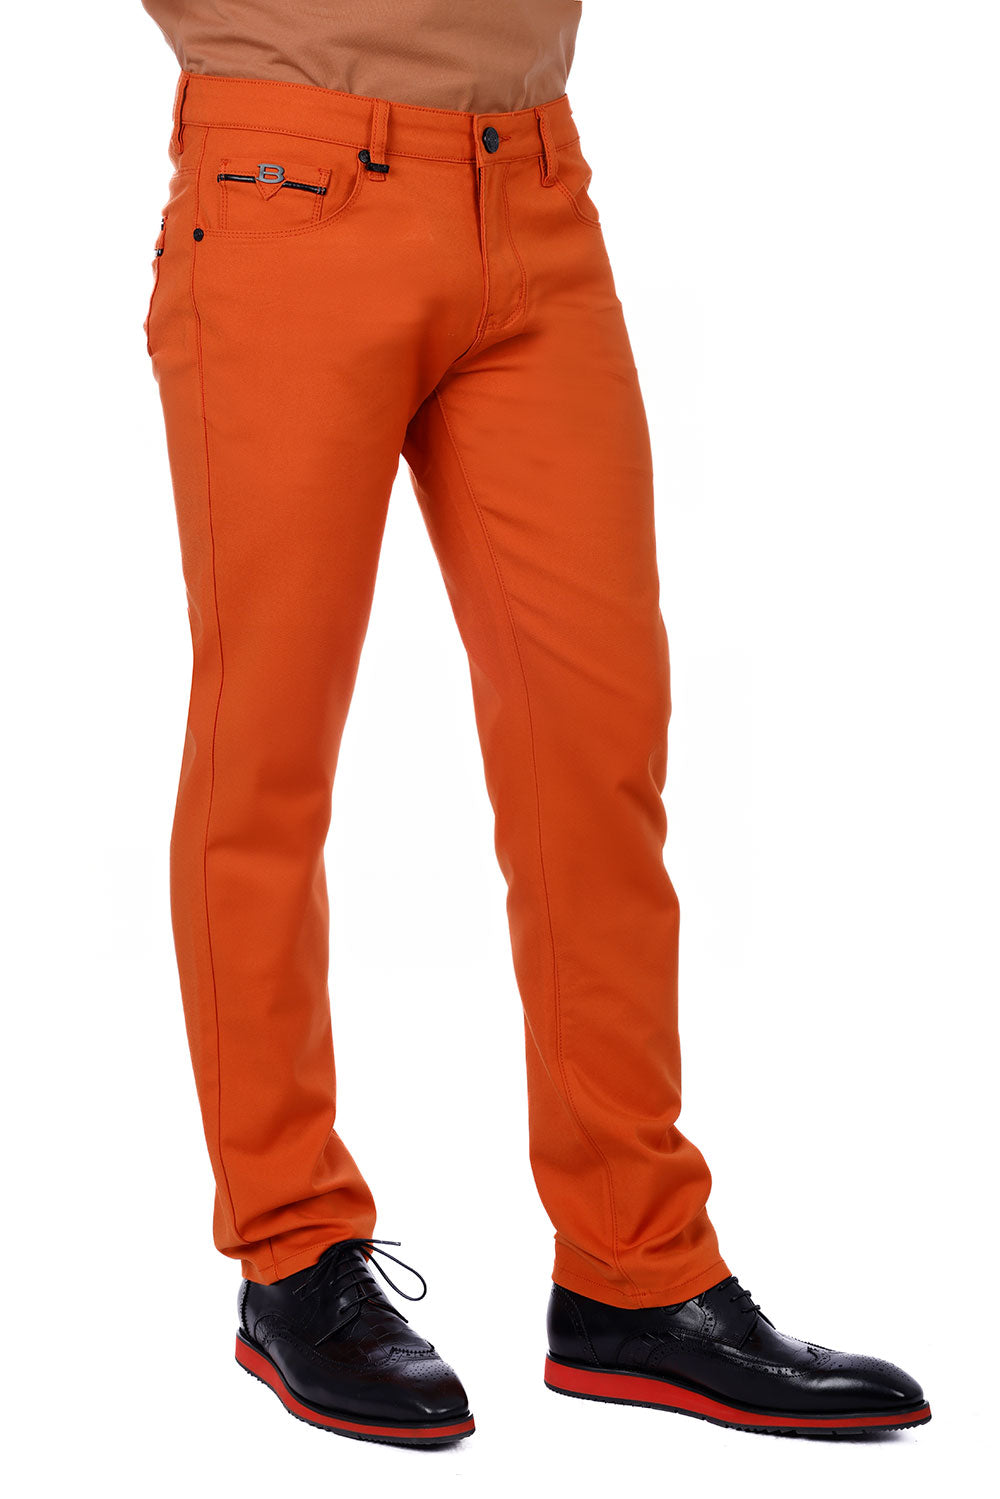 Barabas Men's Slim Fit Solid Color Plain Premium Jeans 3CPW32 Orange